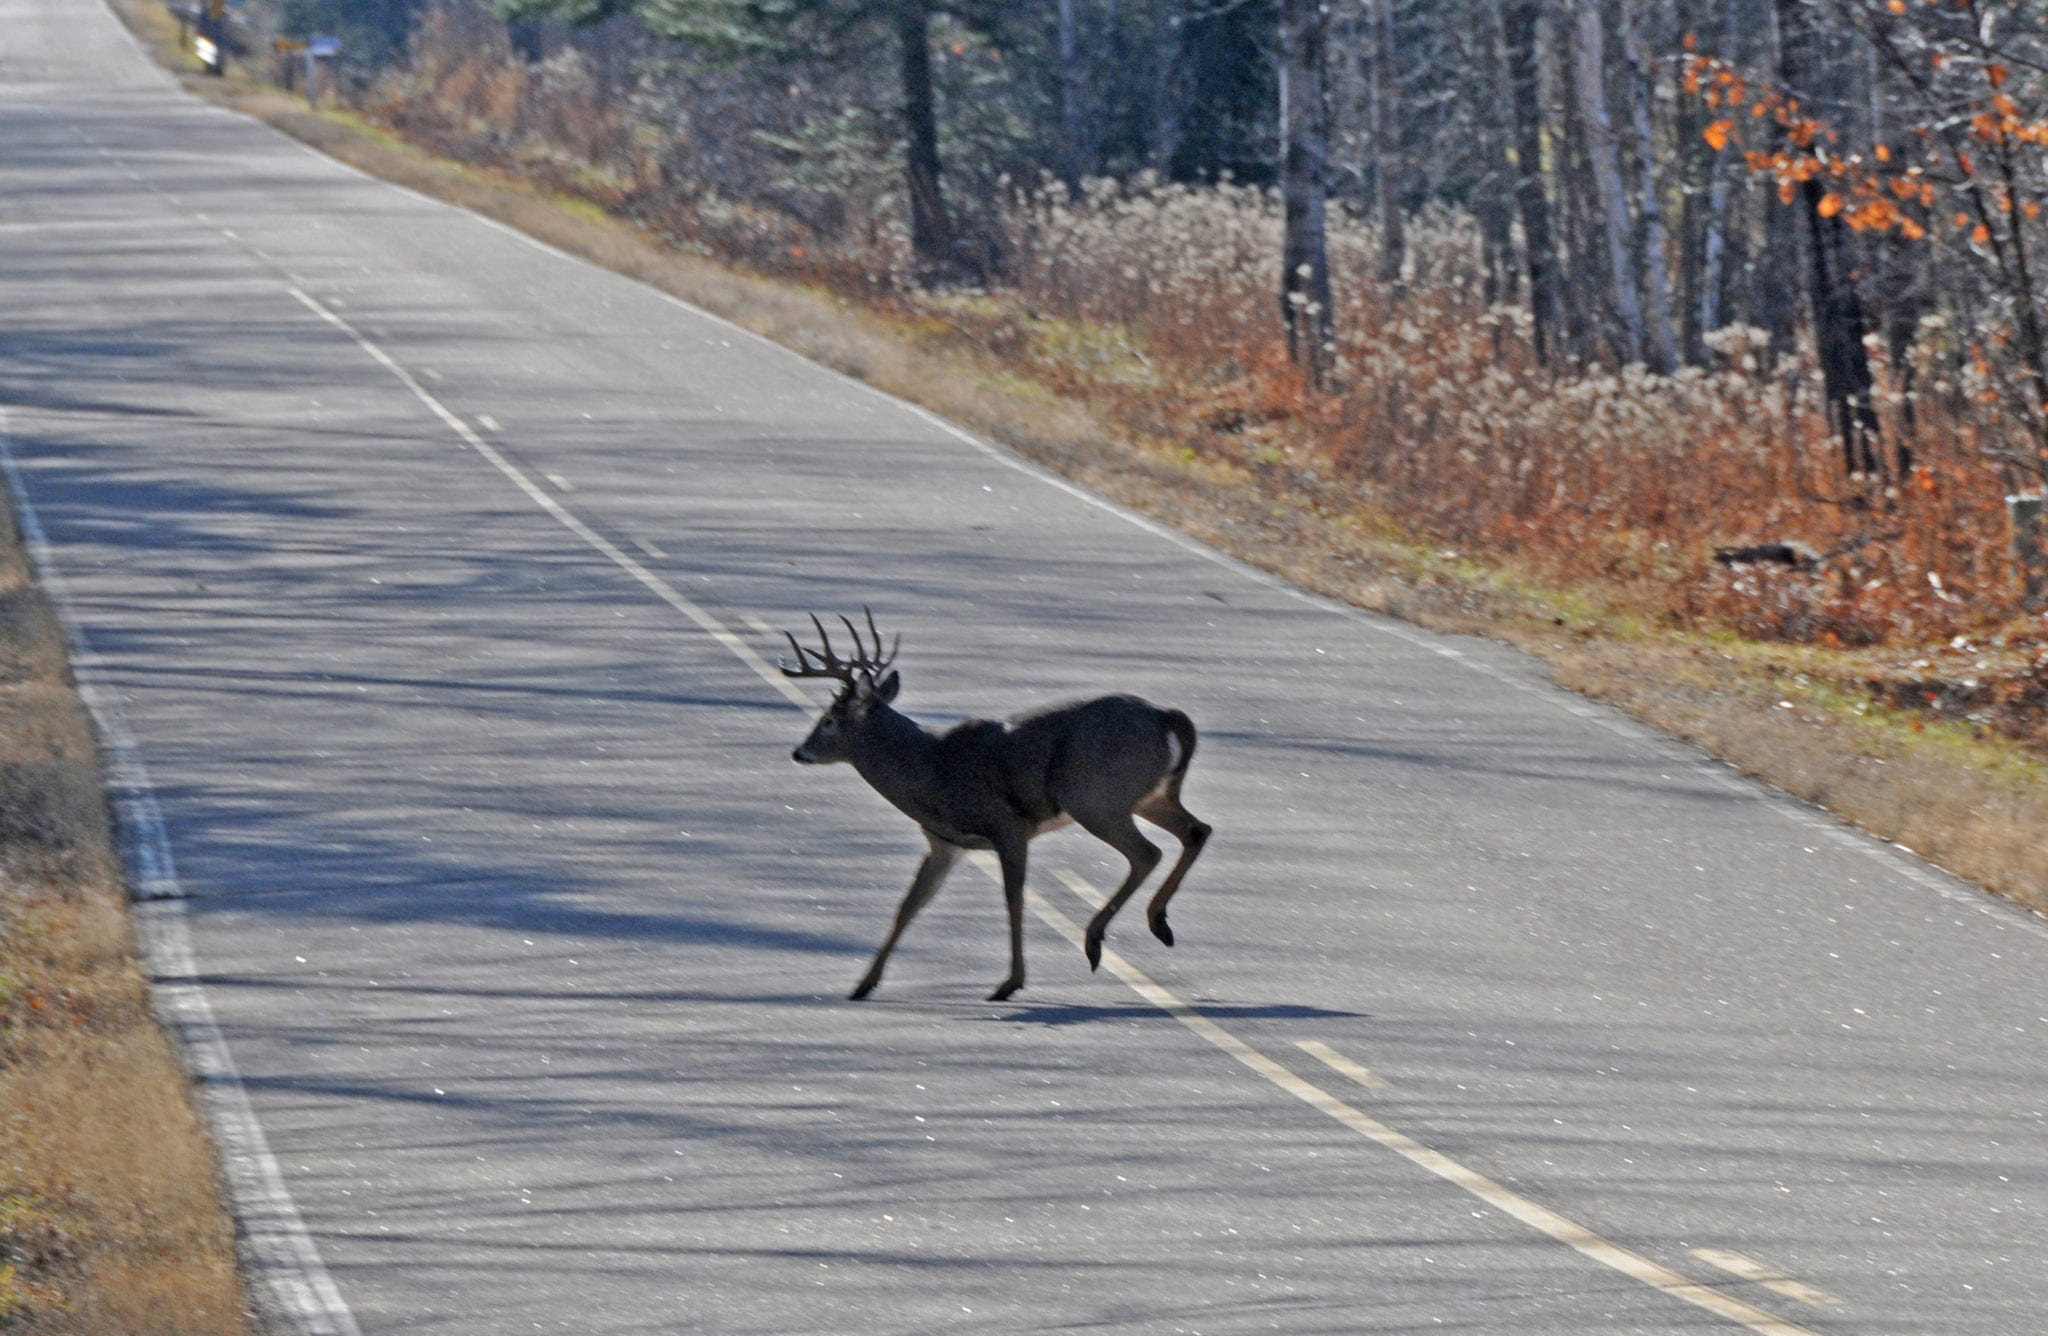 deer-vehicle collisions